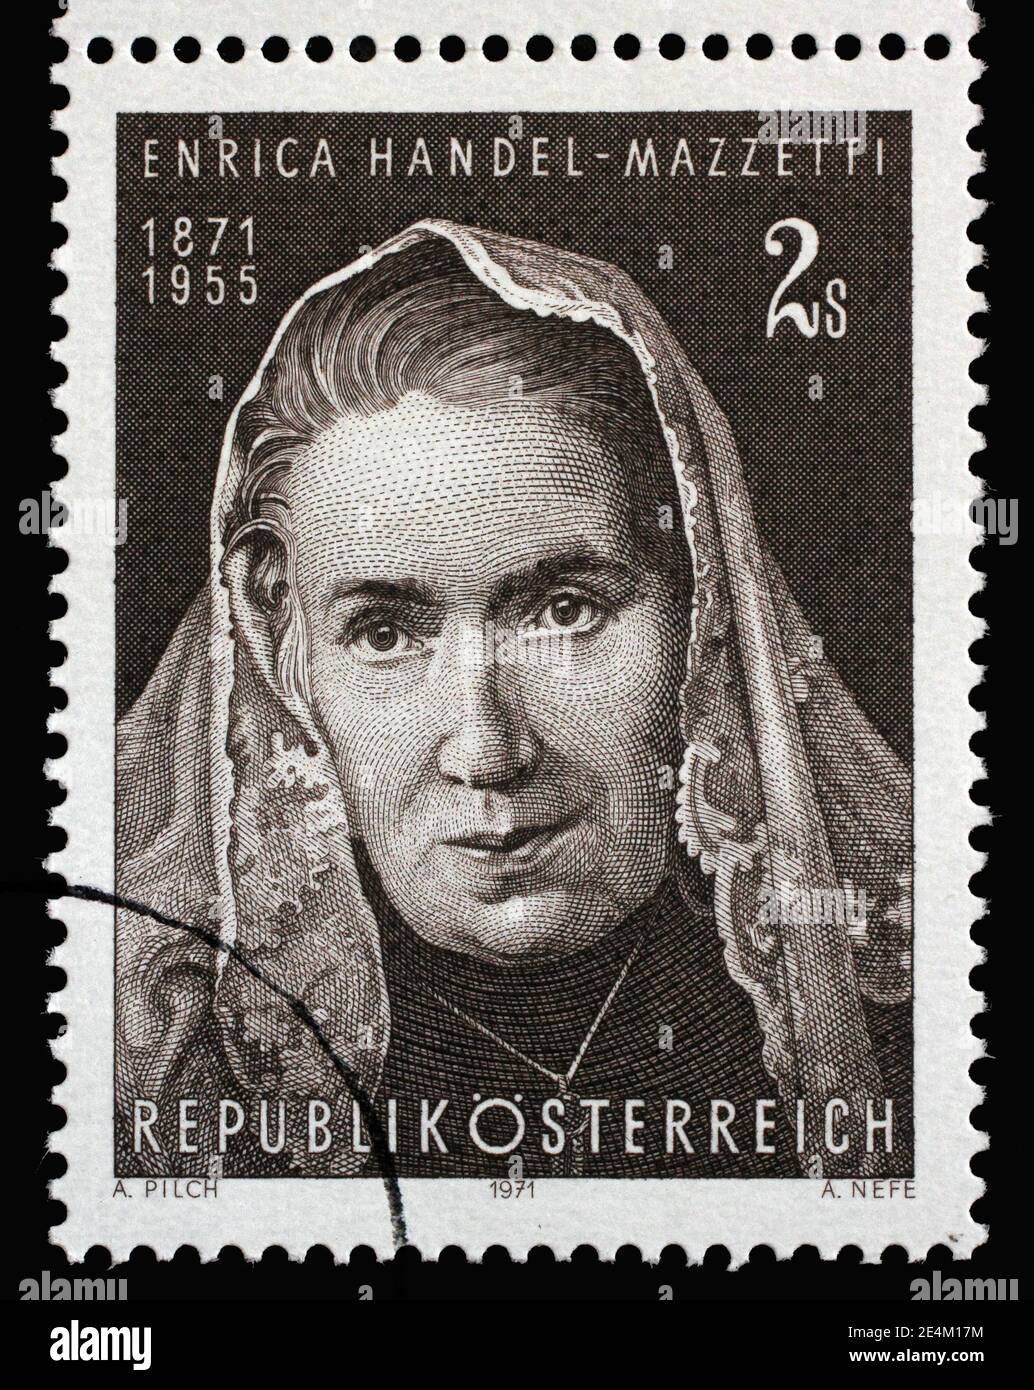 Stamp printed in Austria shows Enrica von Handel-Mazzetti(1871-1955), Austrian poet and writer, known for writing historical romances, circa 1971. Stock Photo